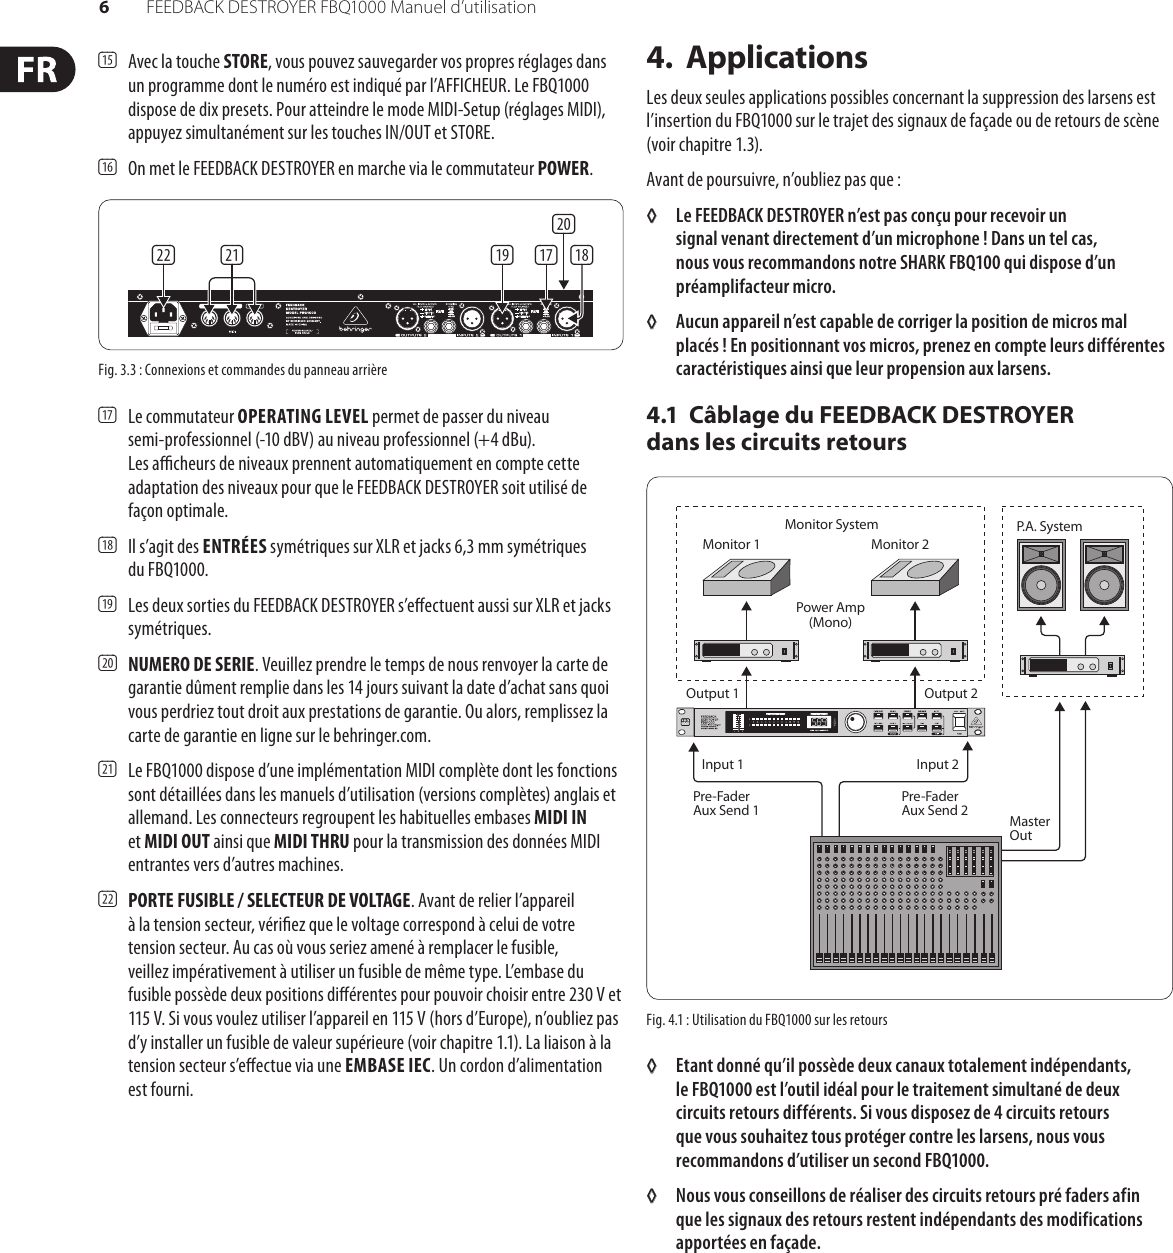 Page 6 of 12 - FEEDBACK DESTROYER FBQ1000 Behringer User Manual (French) P0A3R M FR